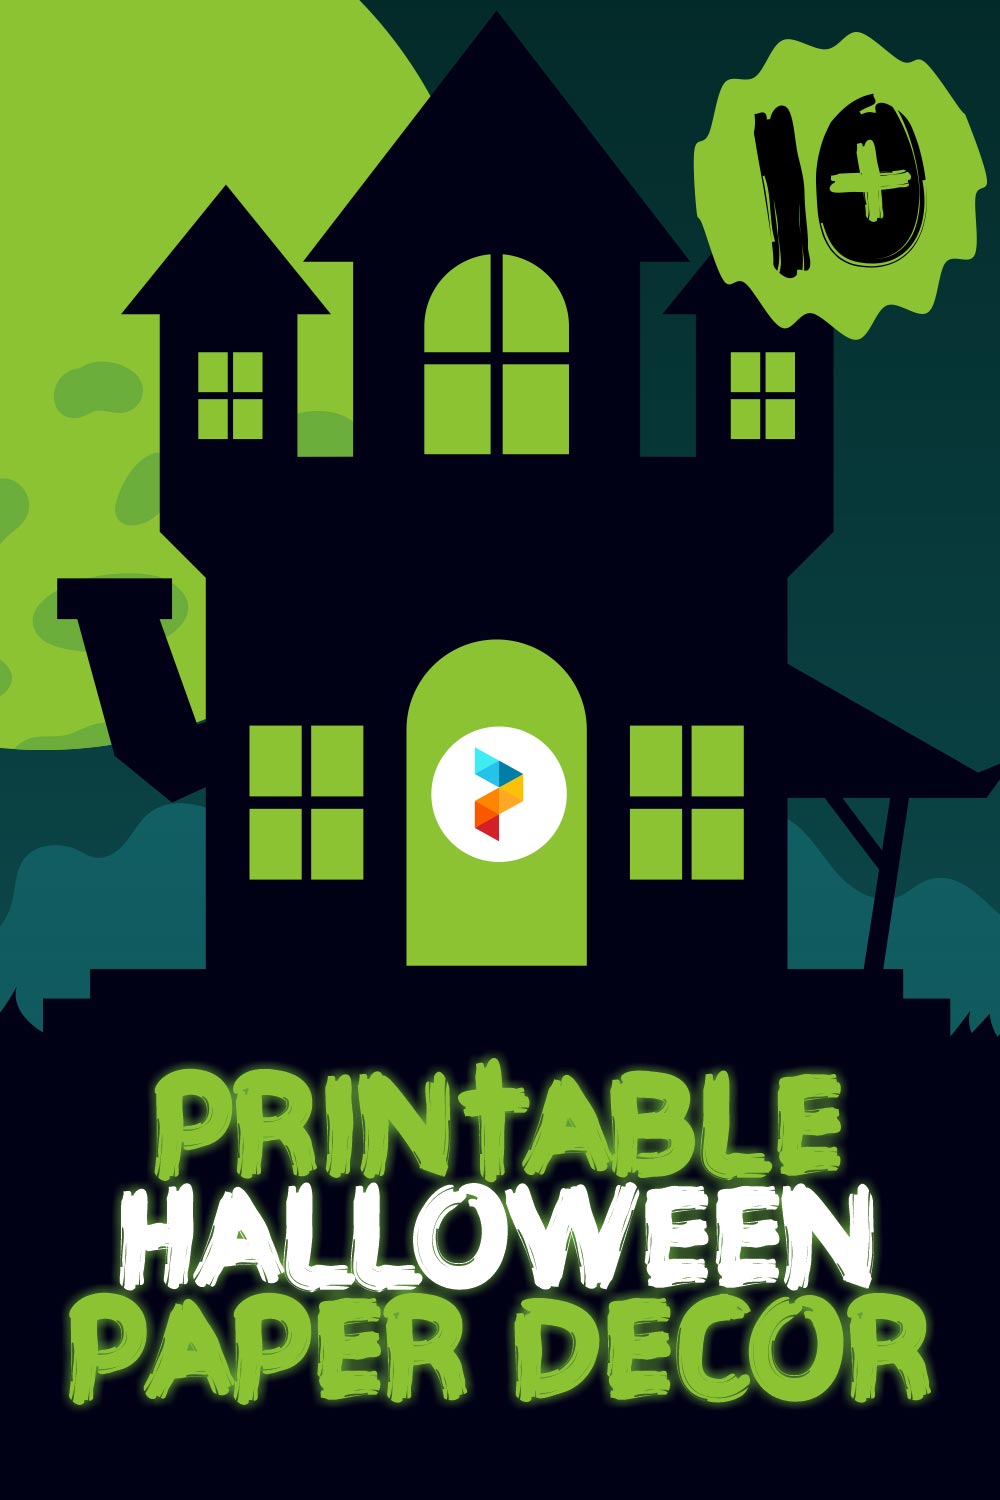 Printable Halloween Paper Decor